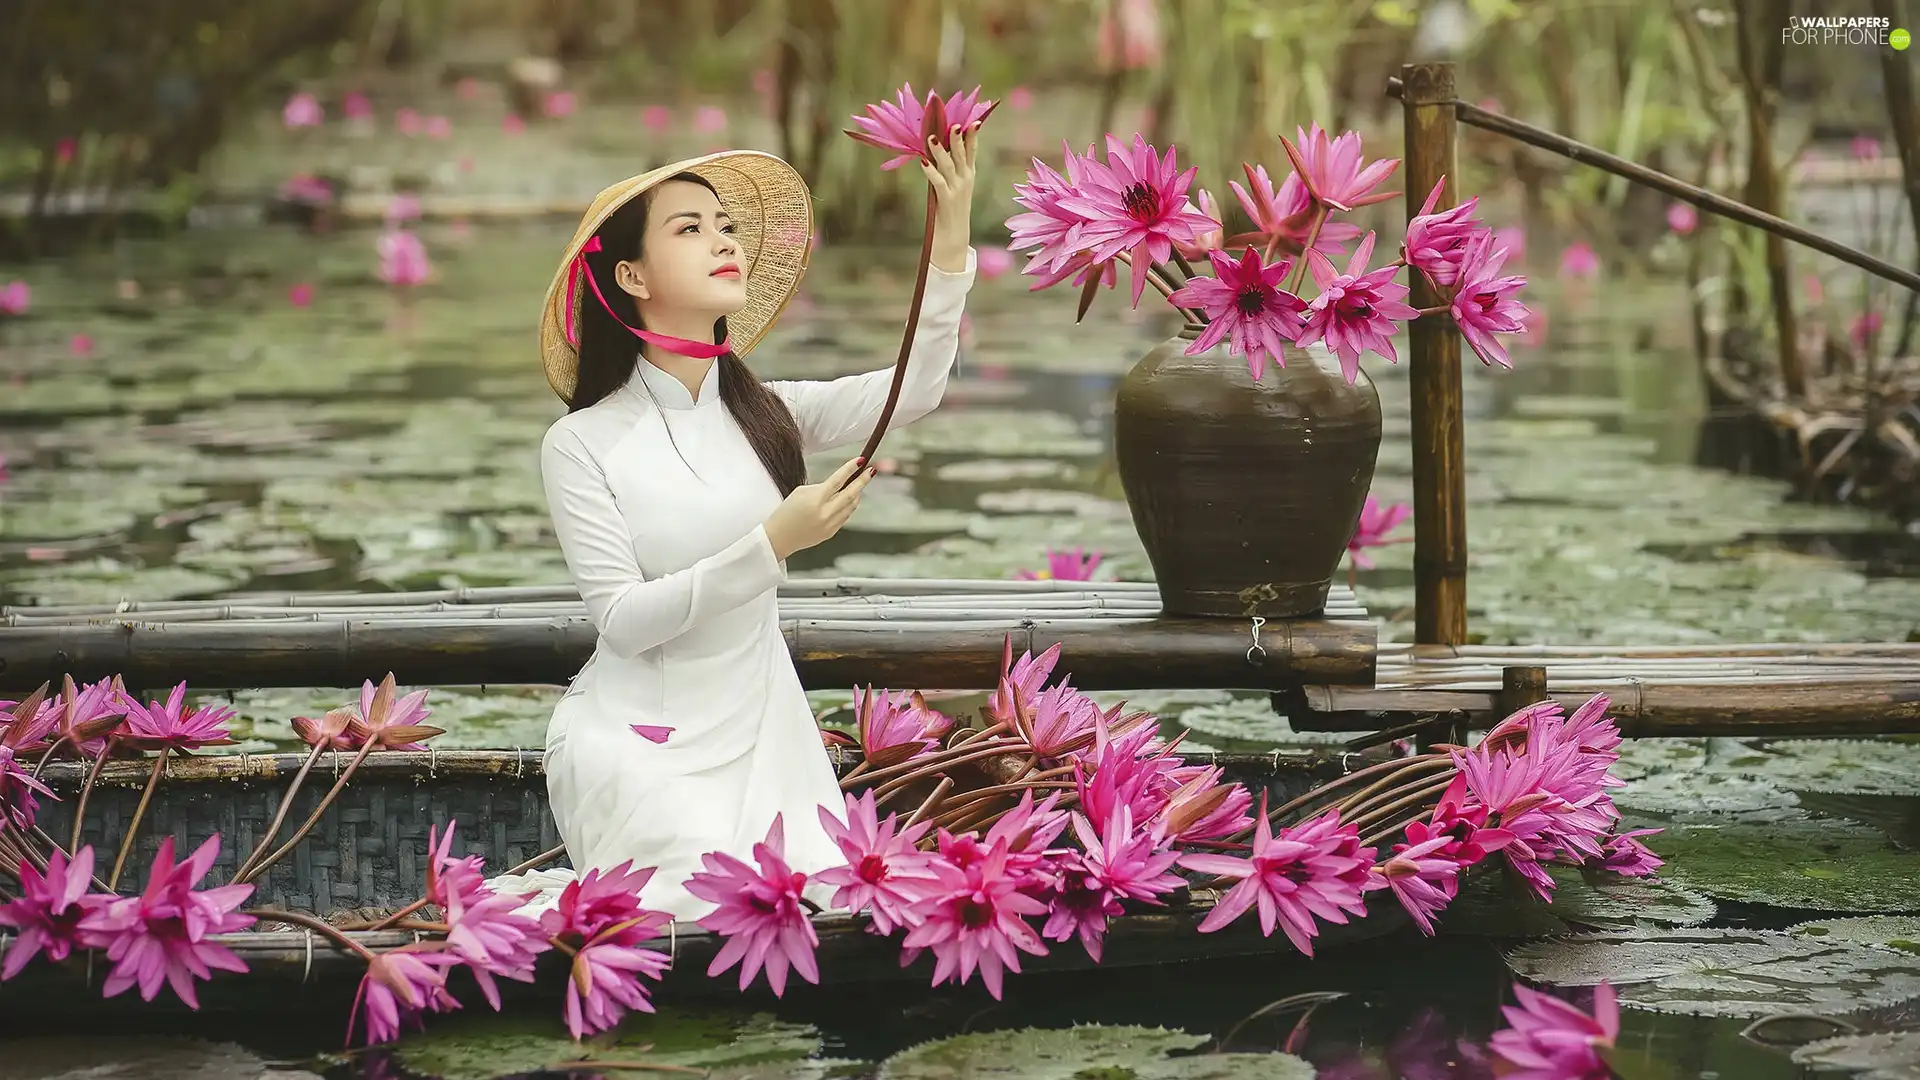 Asian, girl, Hat, dress, Water lilies, Boat, Vase, Flowers, Platform